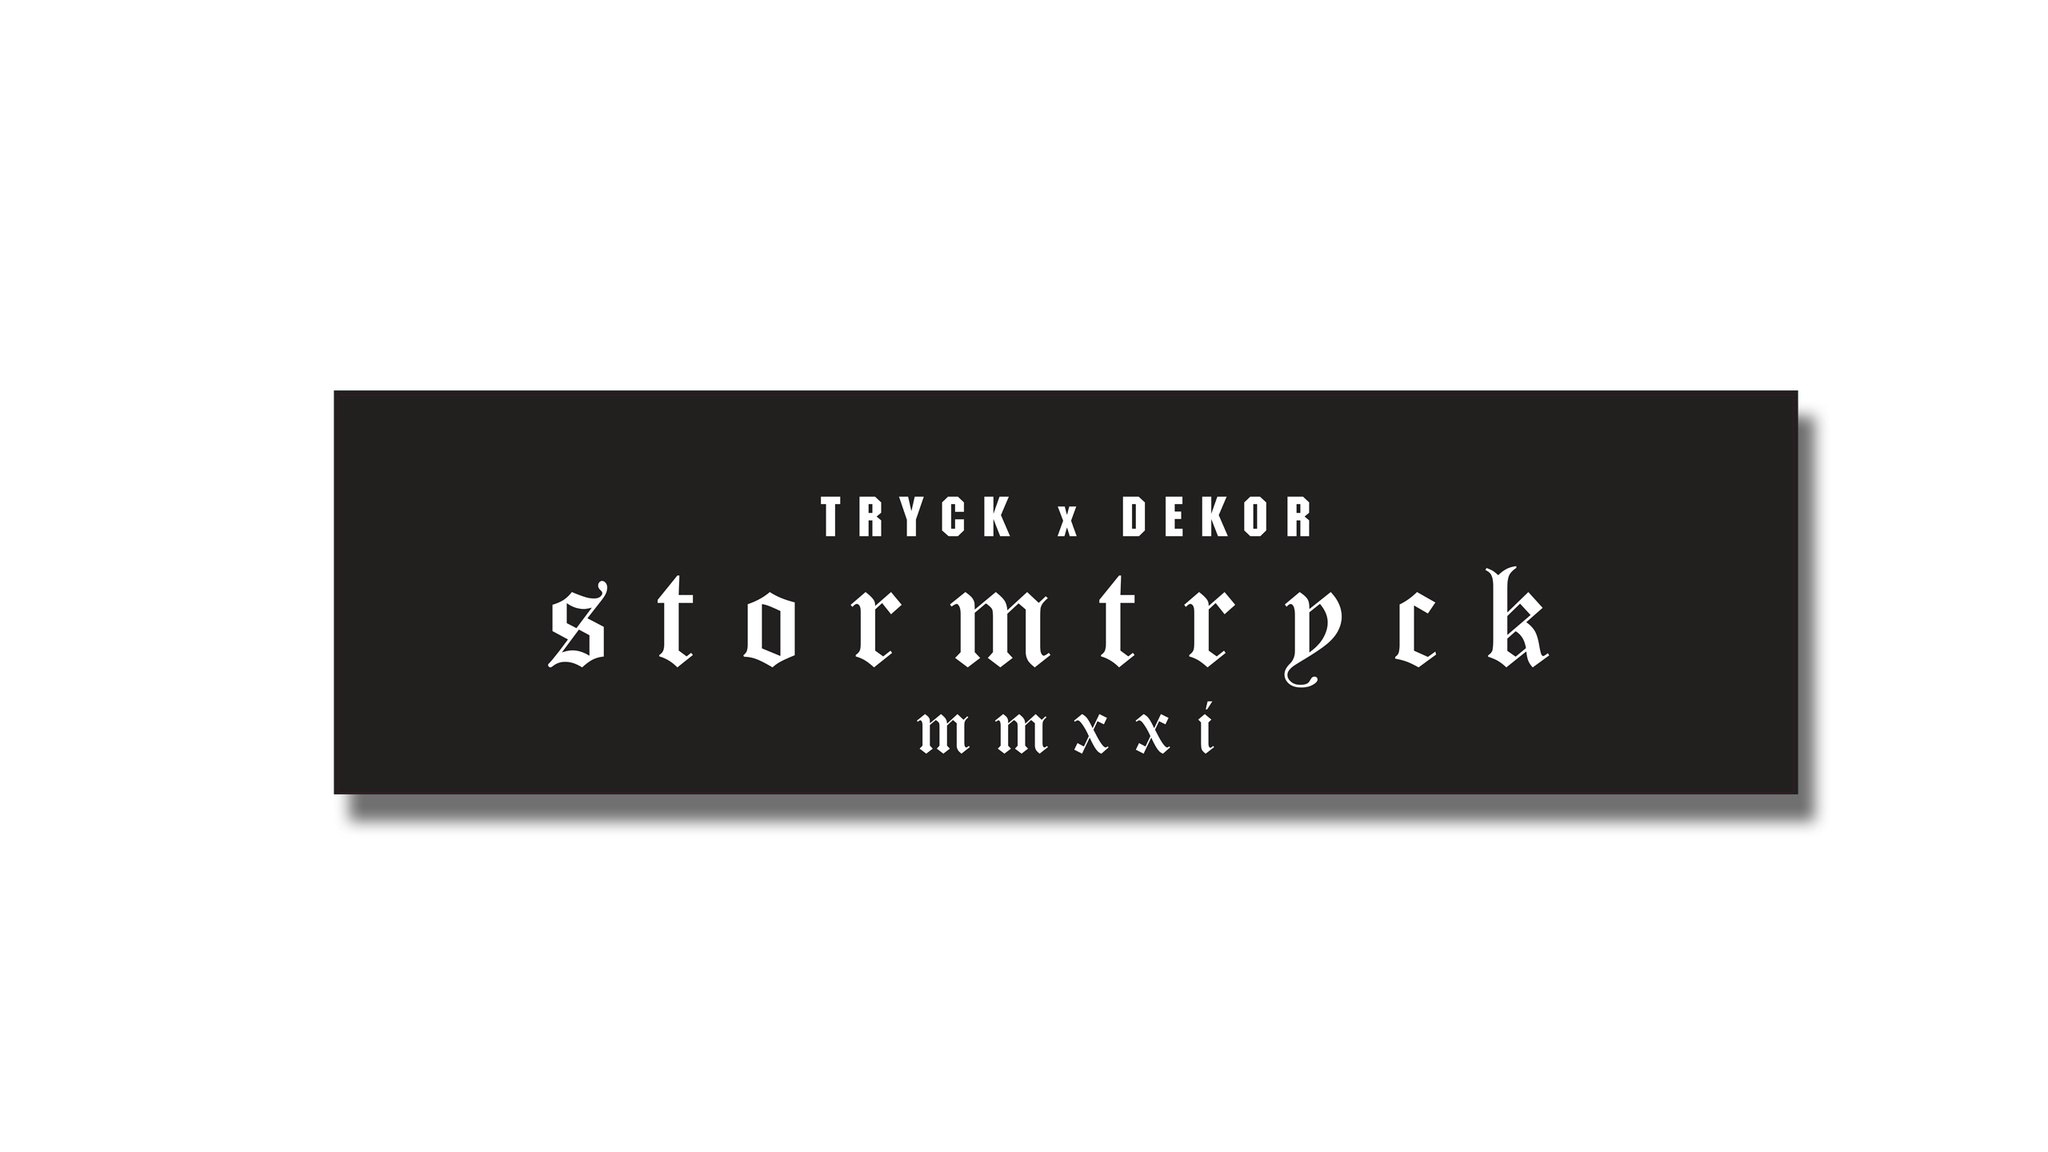 Streamer "STORMTRYCK"